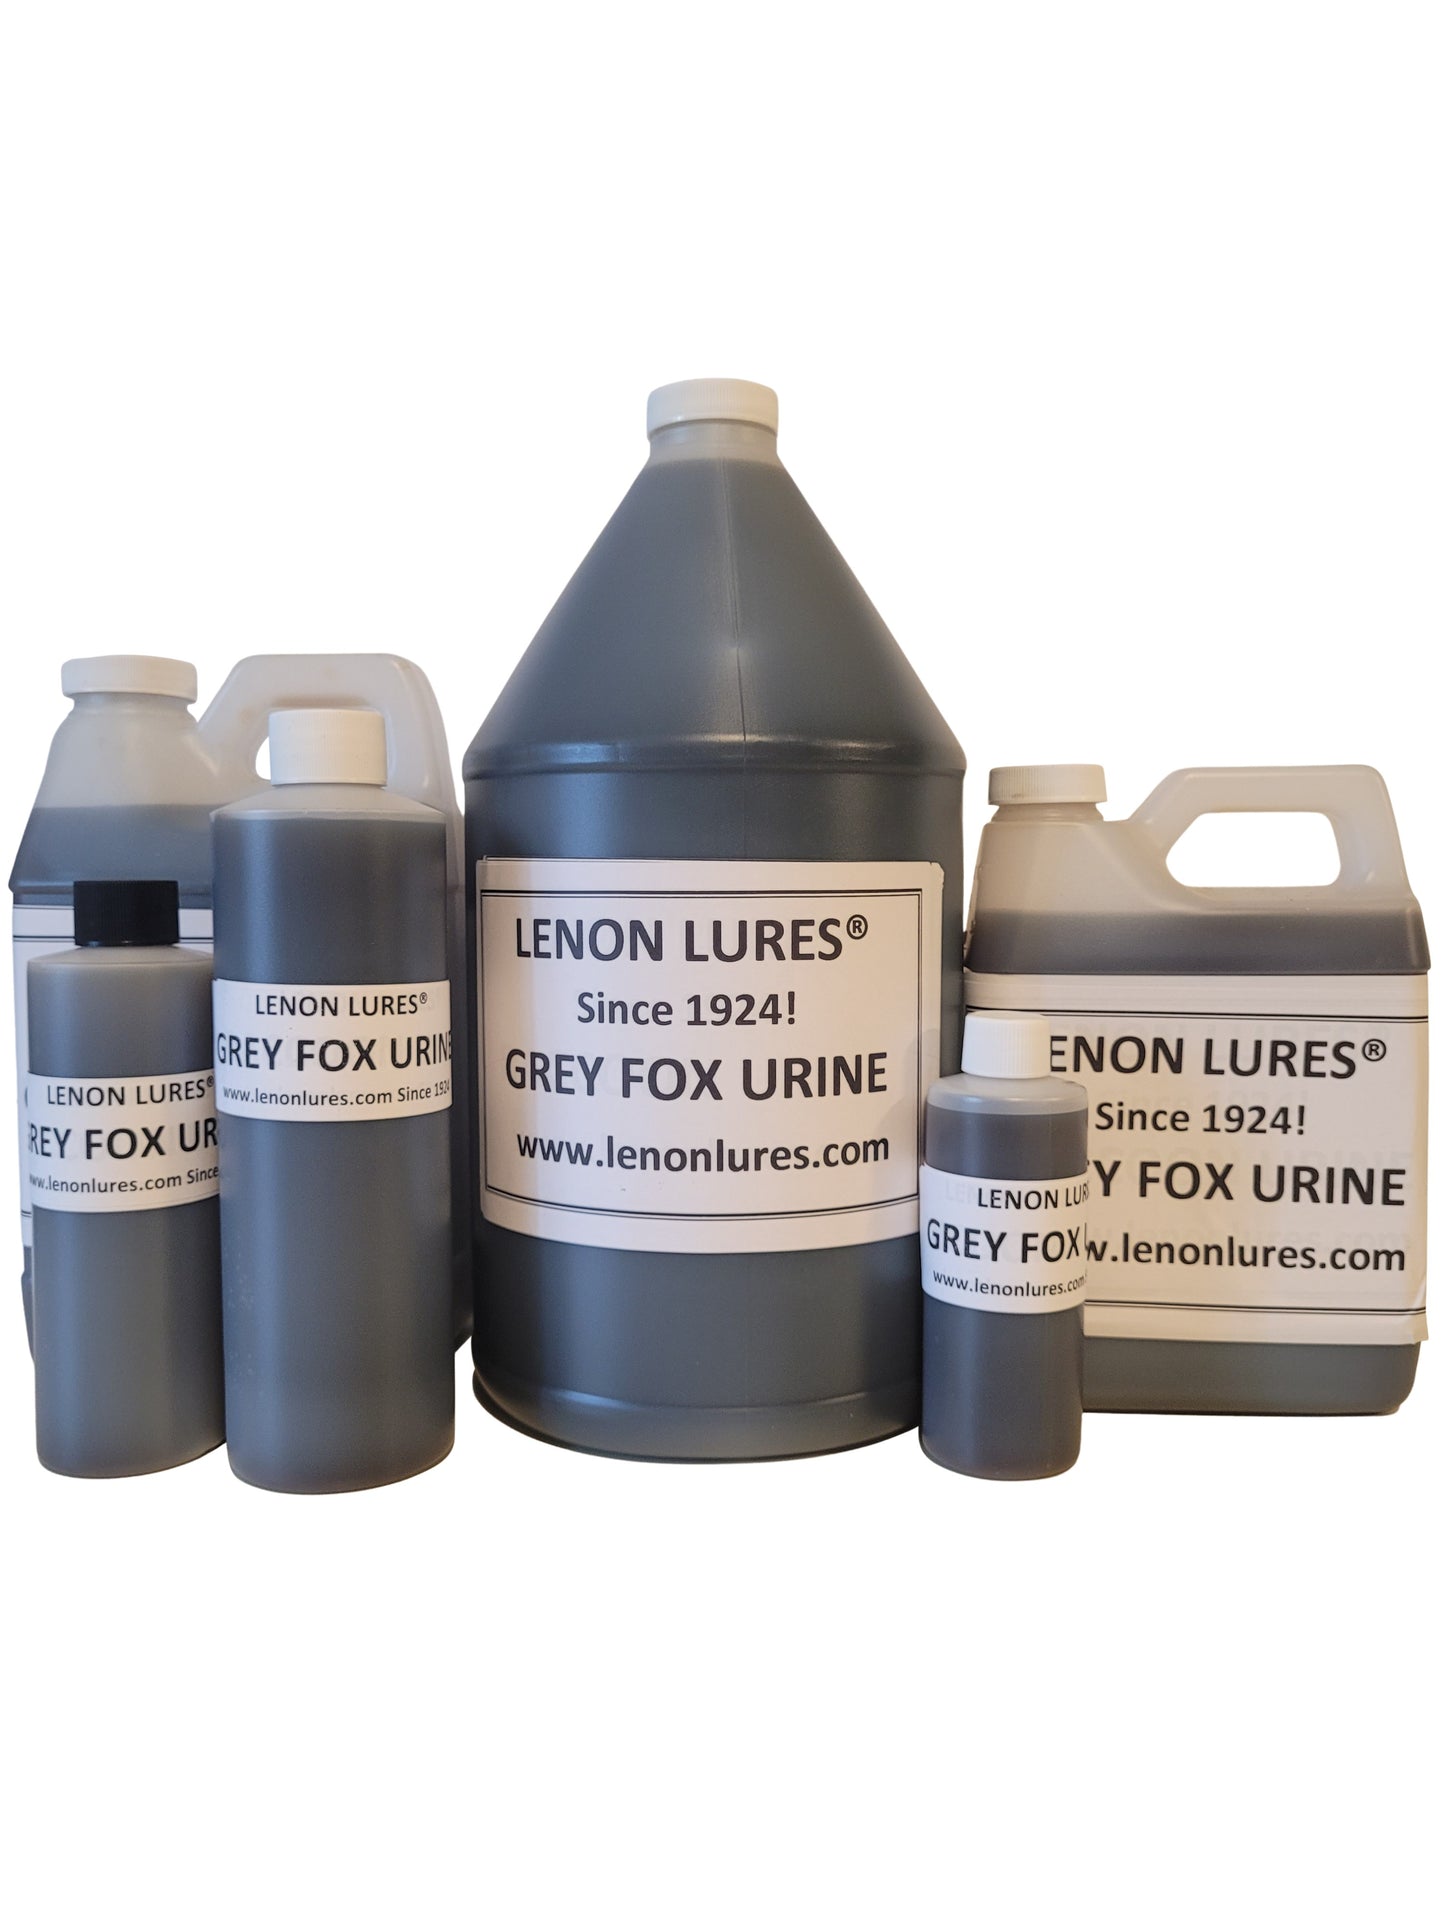 Lenon's Grey Fox Urine